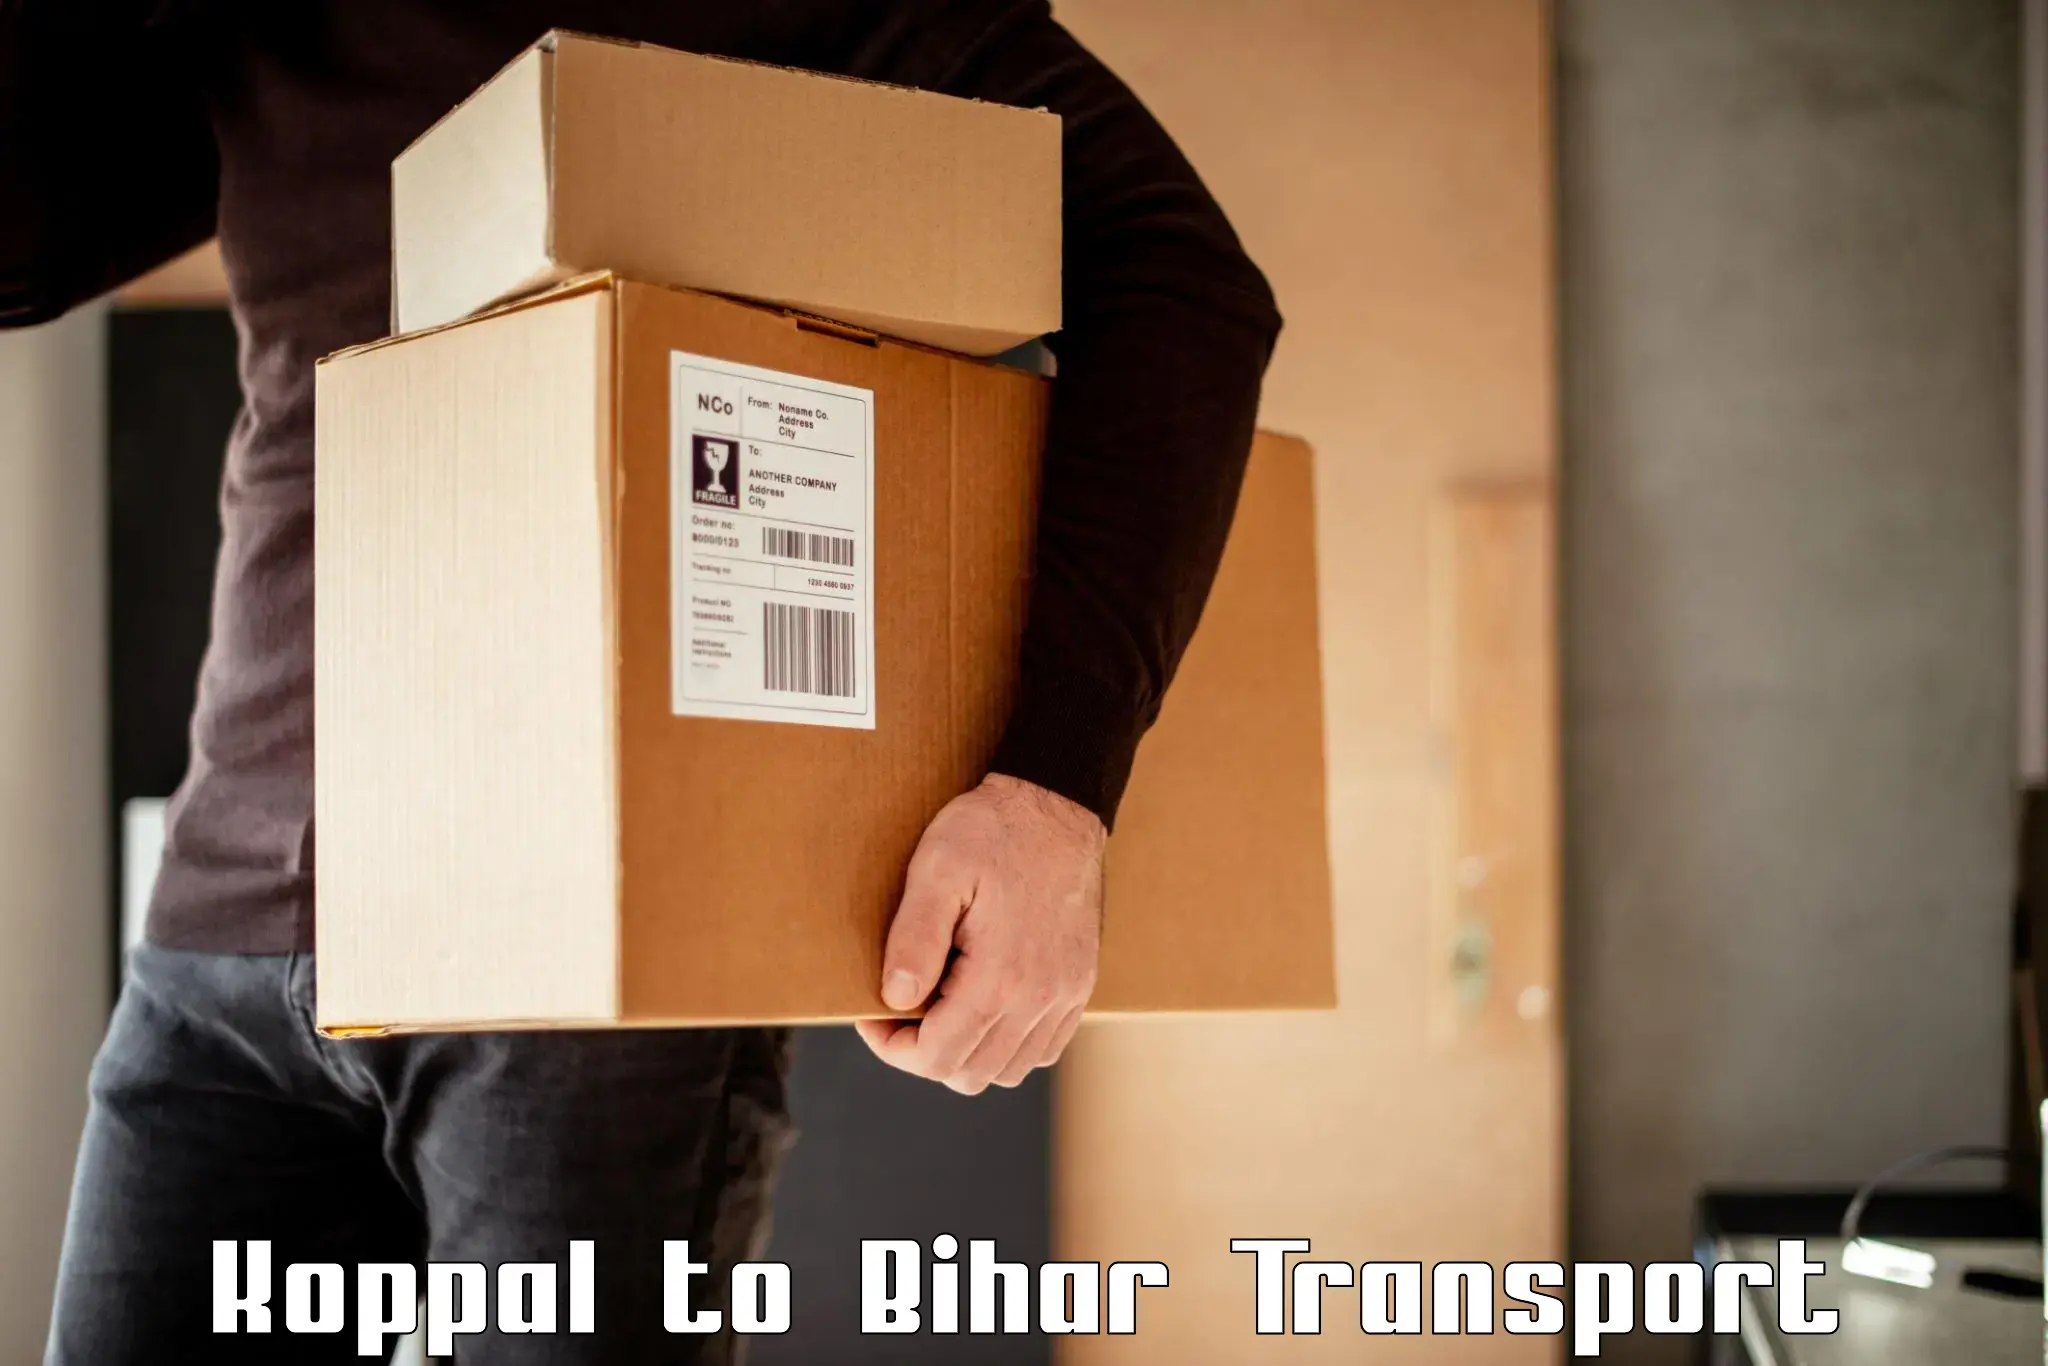 Daily transport service Koppal to Rajpur